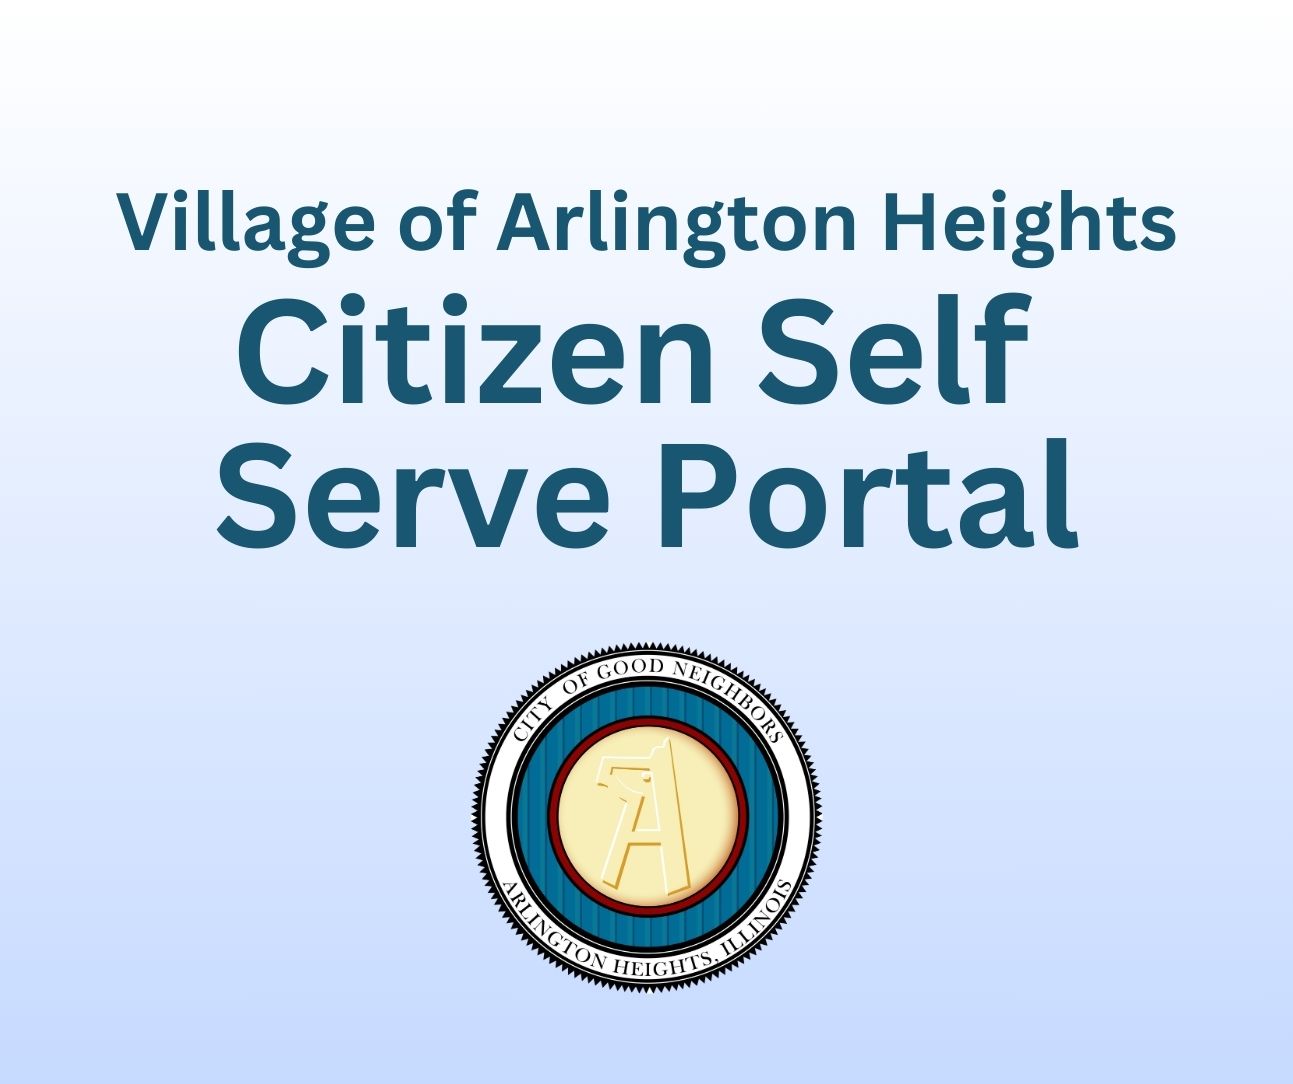 Village of Arlington Heights Citizen Self Portal